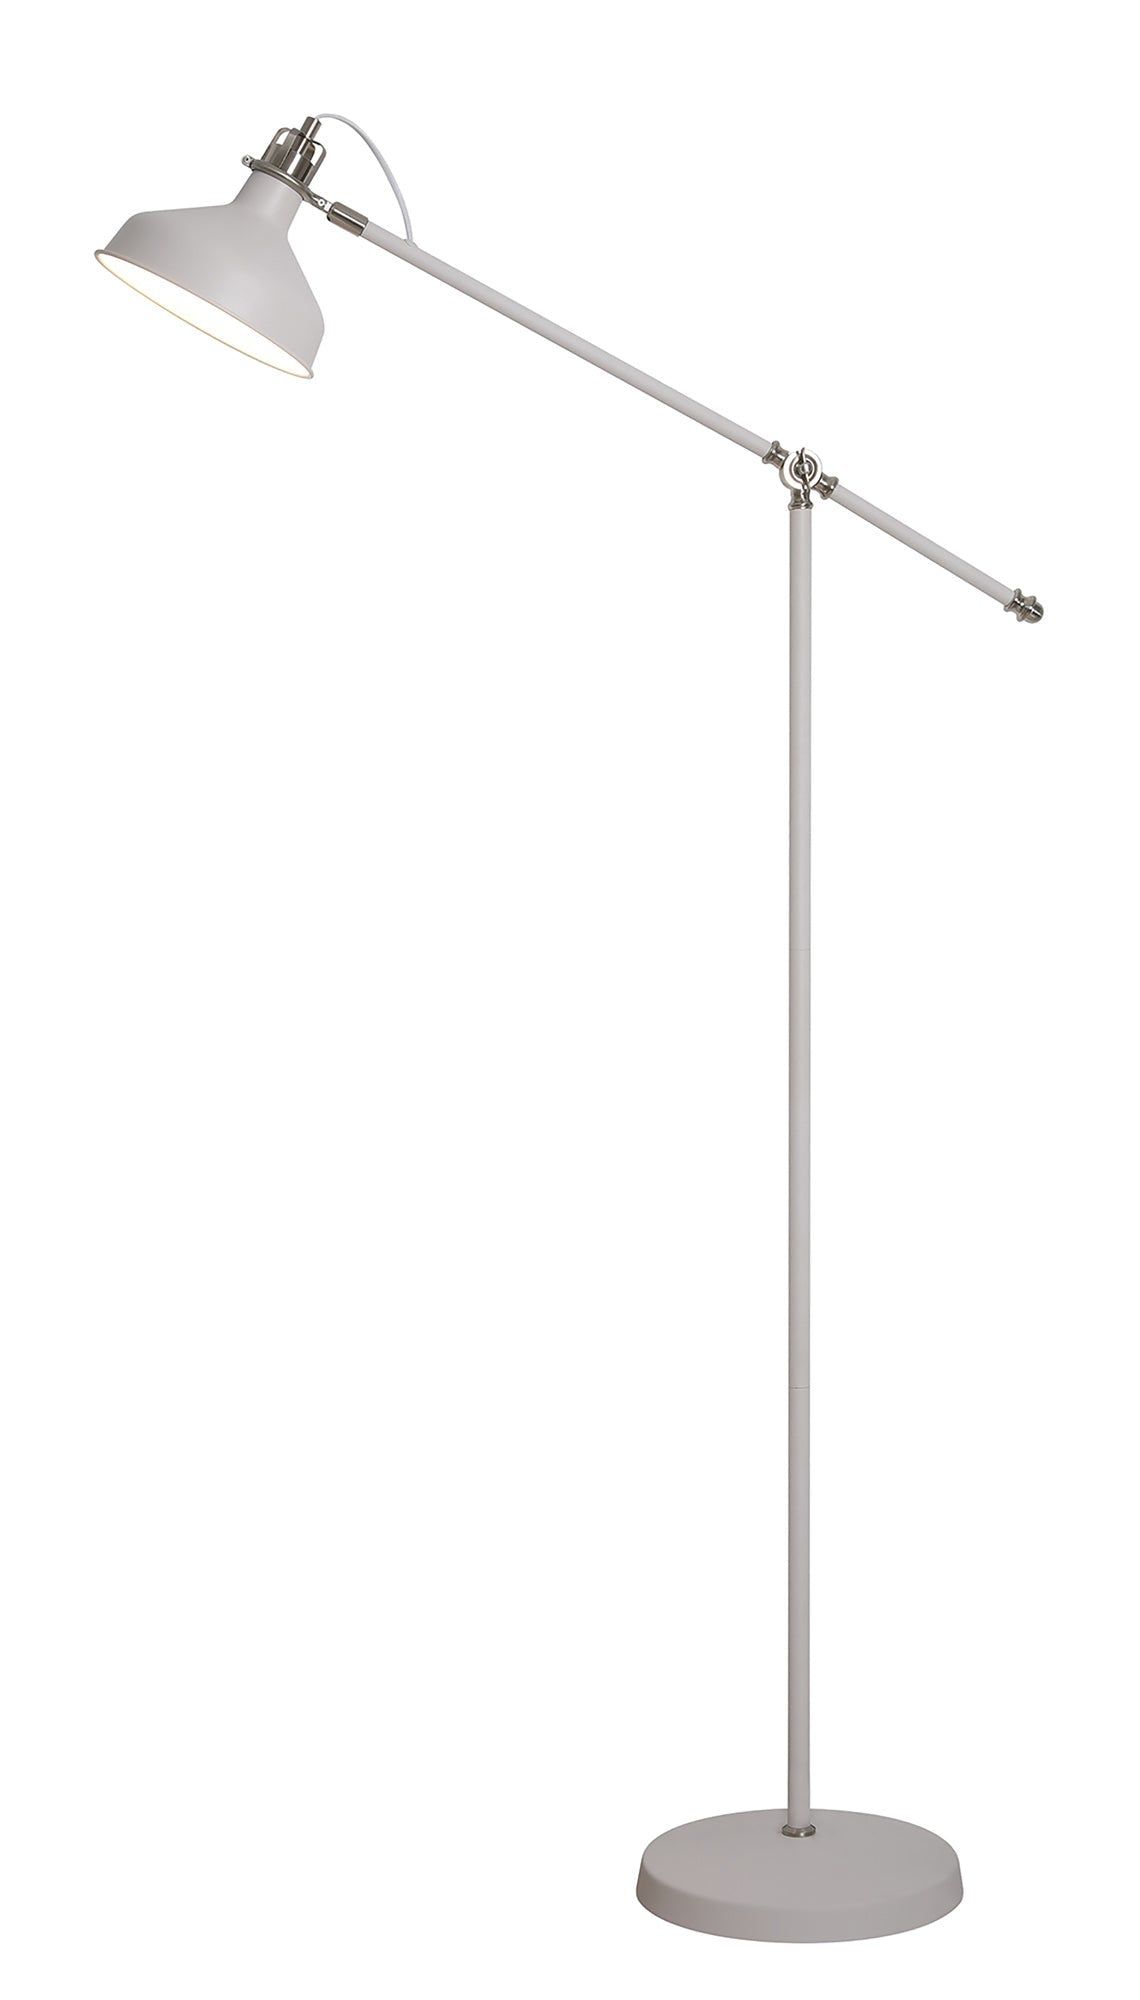 Jetson Adjustable Floor Lamp, 1 x E27, SandWhite